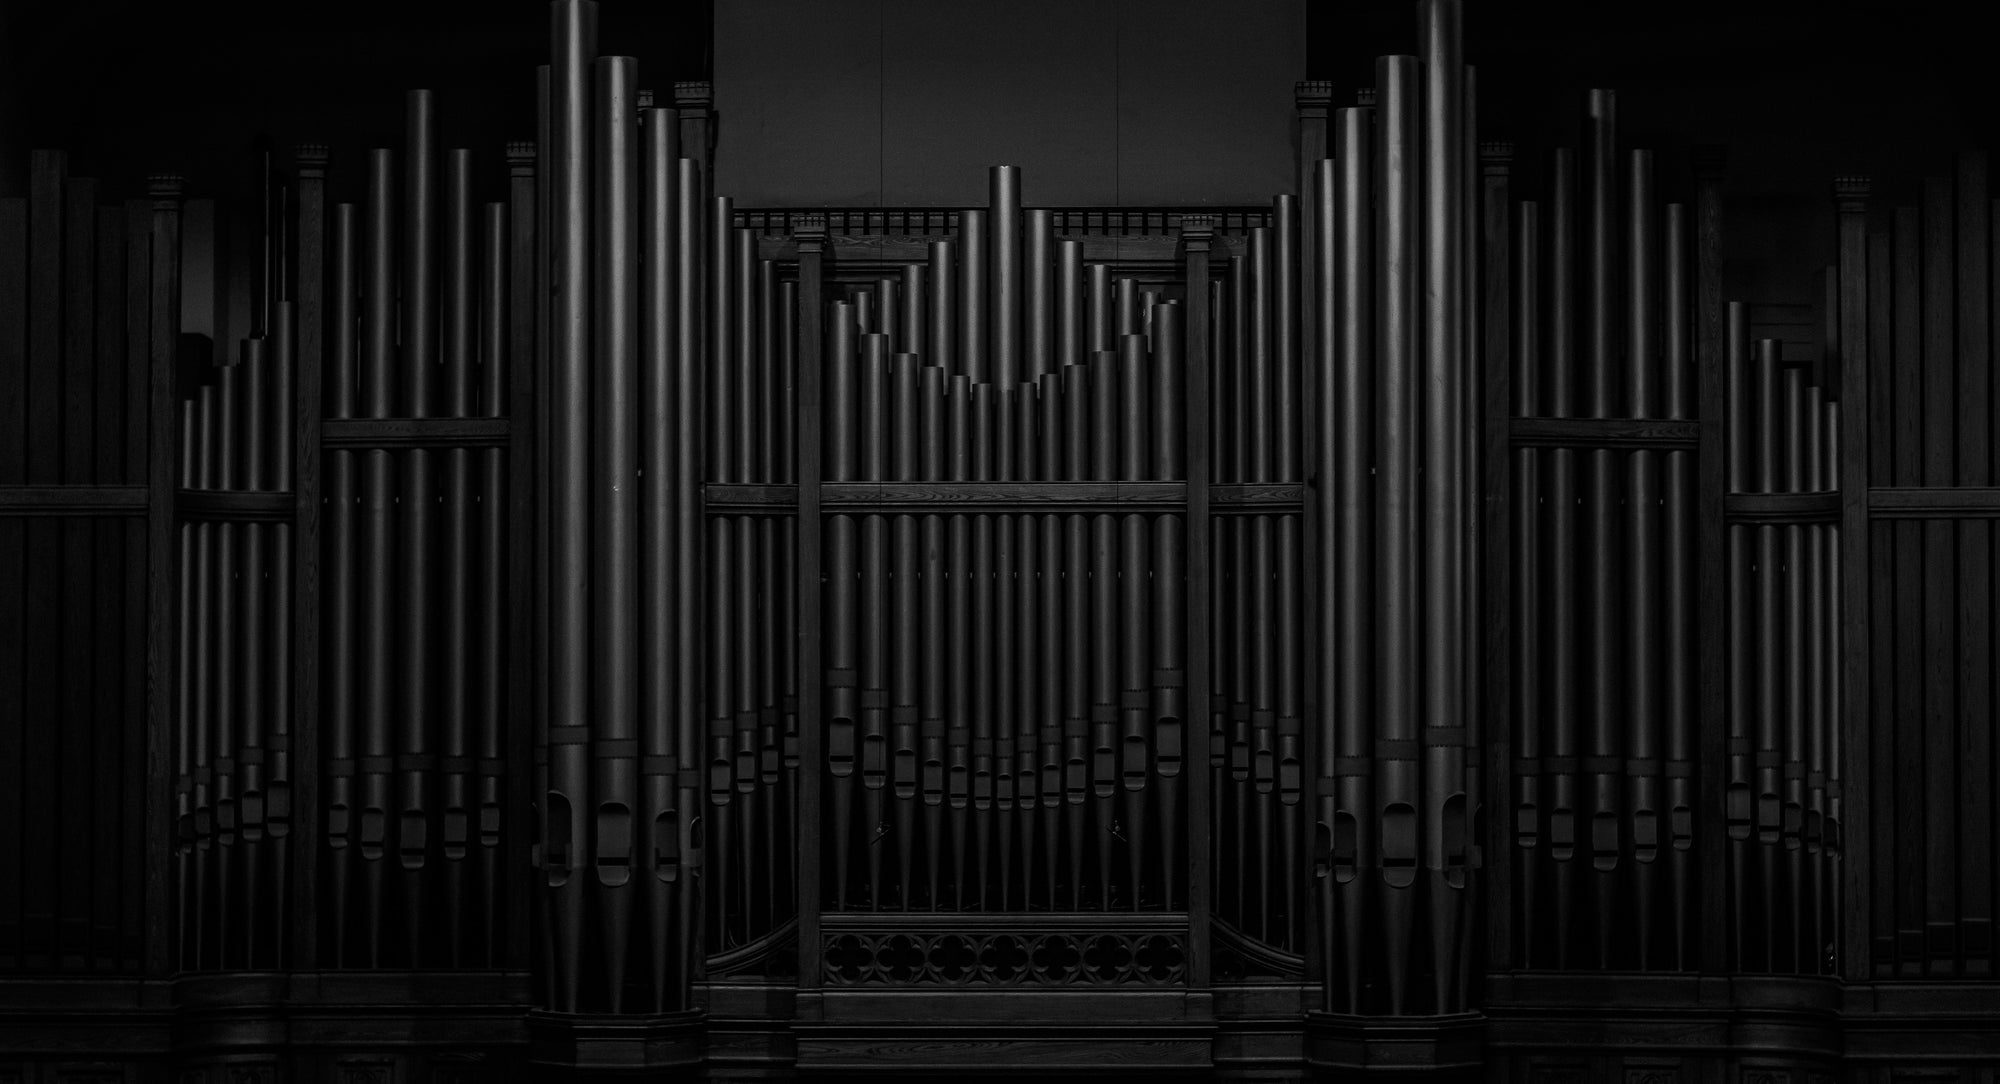 A black pipe organ in a dark room.